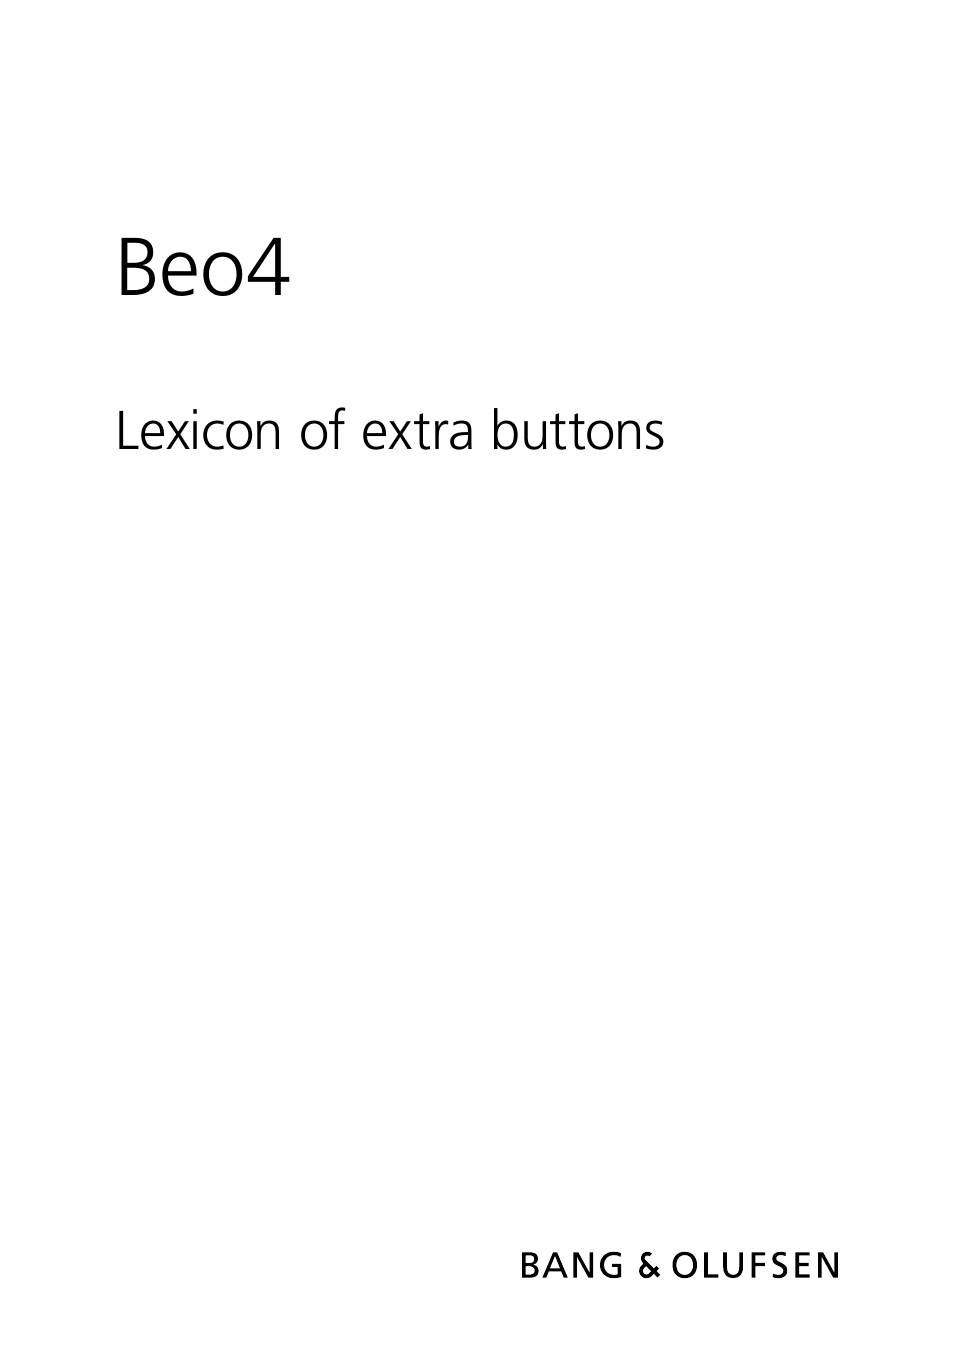 Beo4 (w/ navigation button) - Lexicon